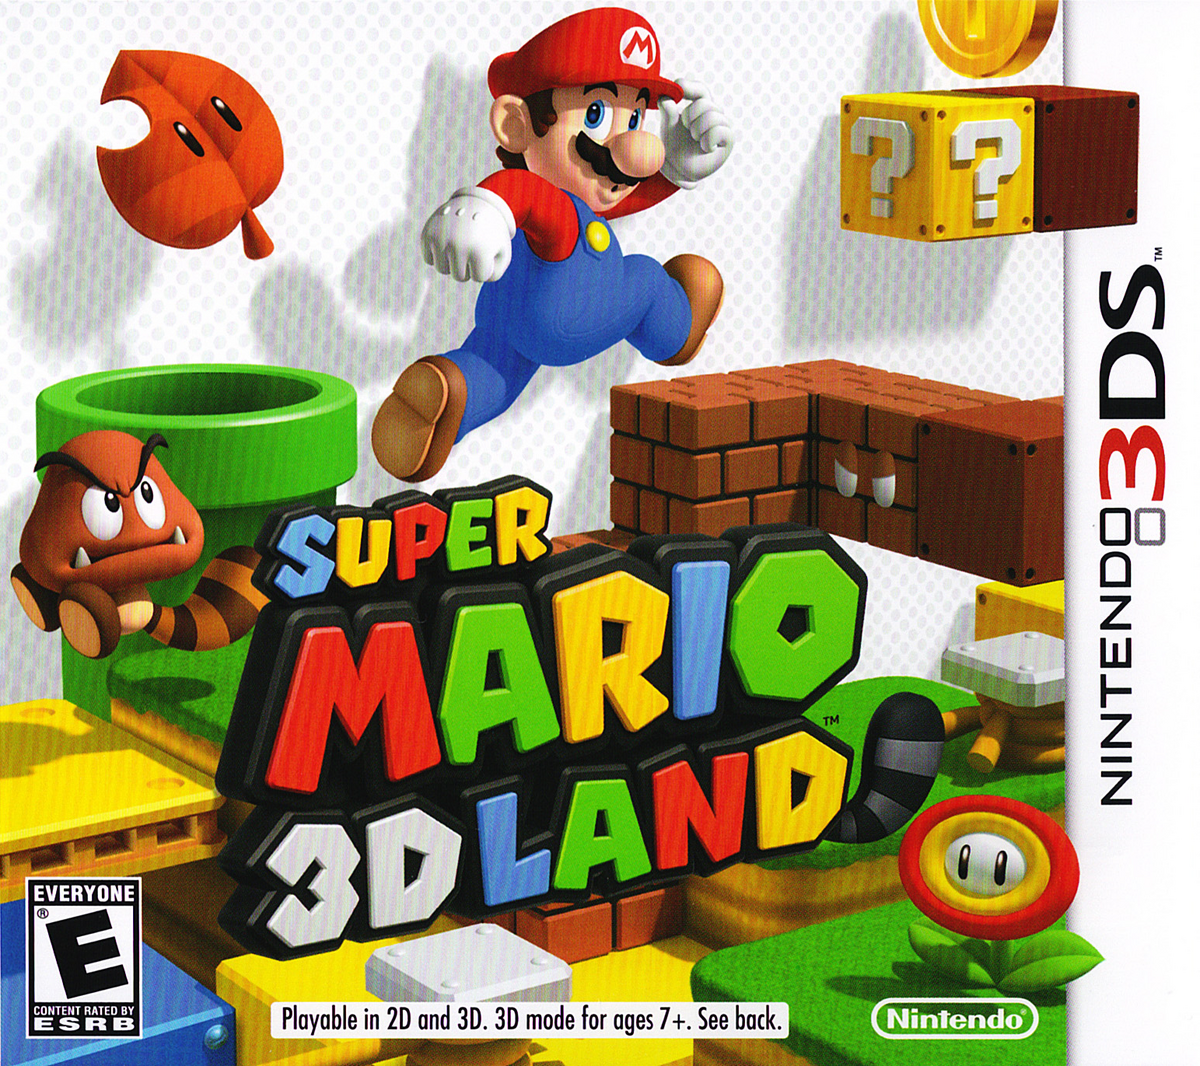 Luigi's Mansion (Nintendo 3DS) - Super Mario Wiki, the Mario encyclopedia